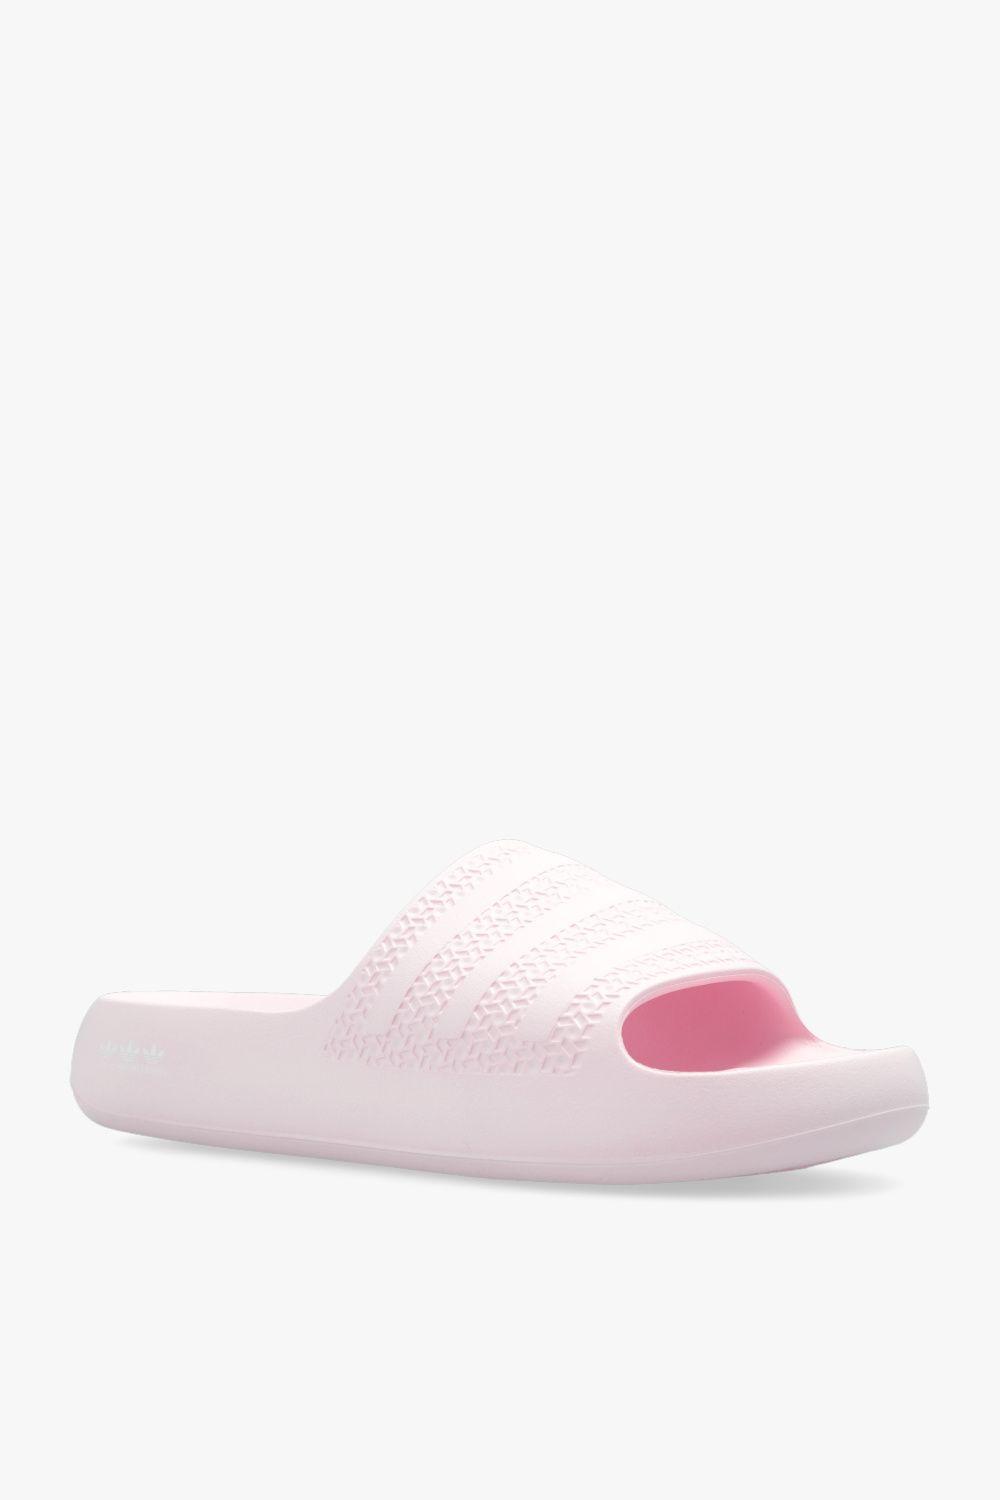 adidas Originals 'adilette Ayoon' Slides in Pink | Lyst